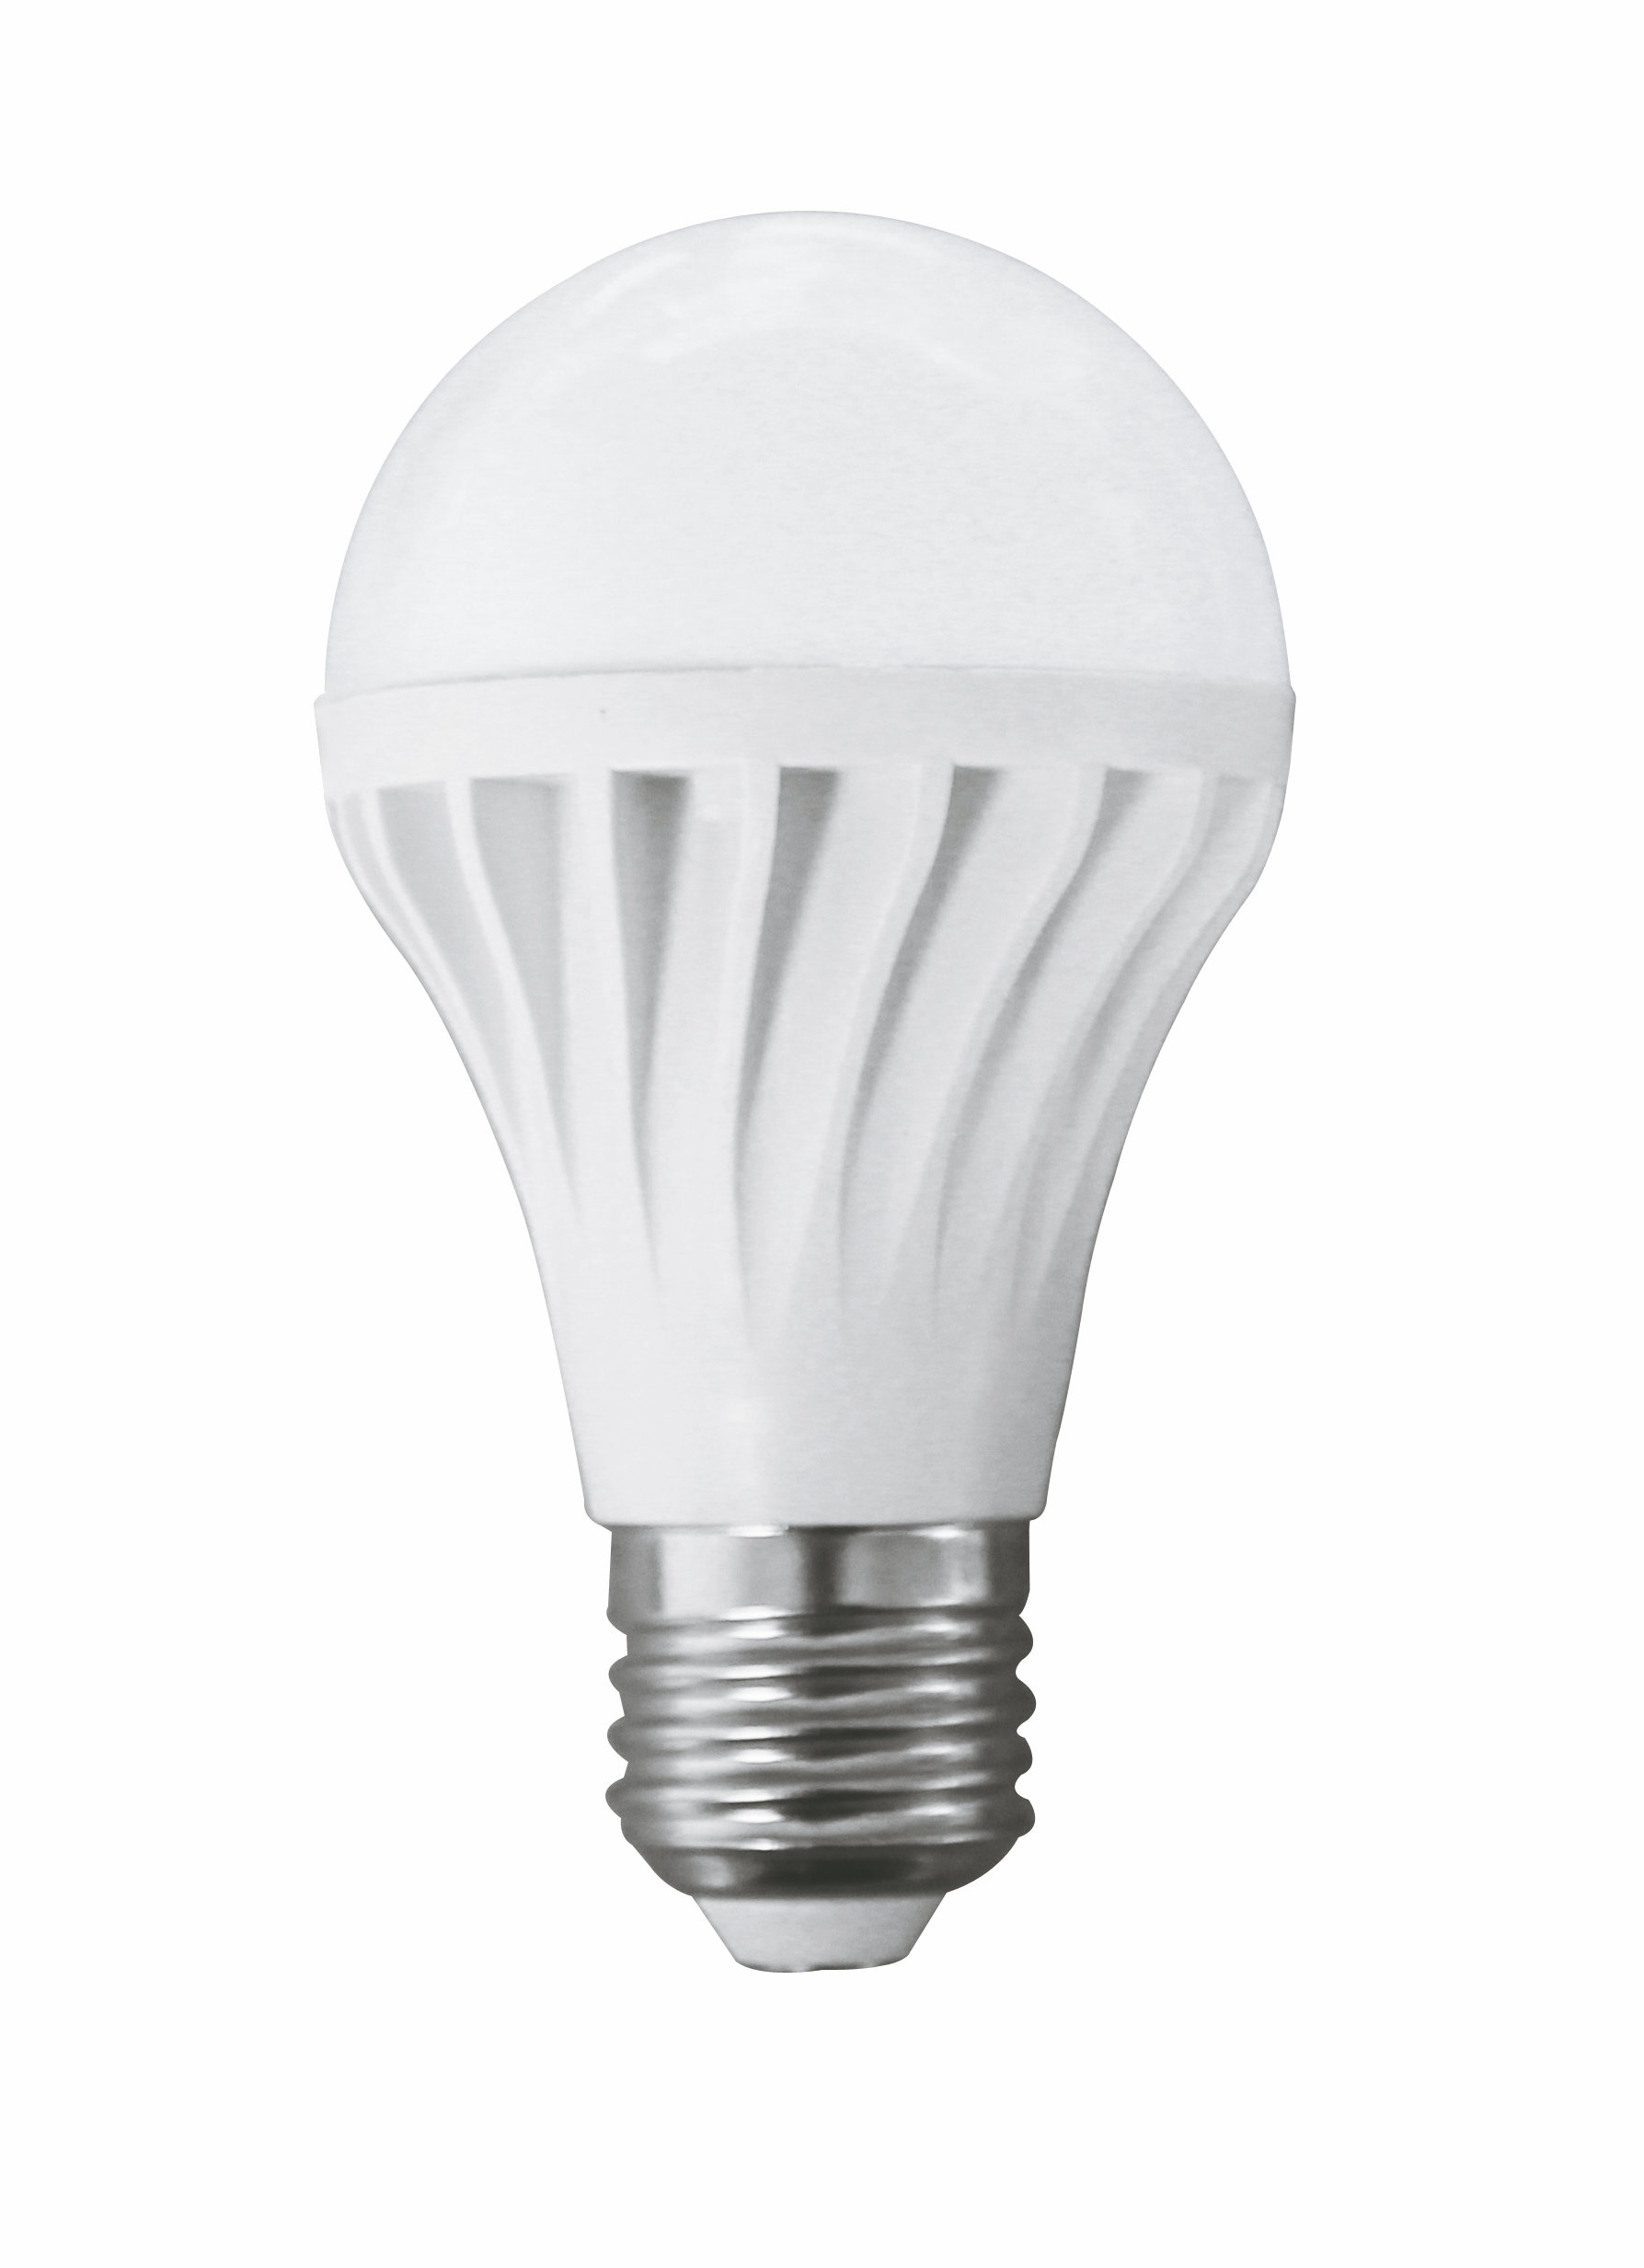 TUV CE ROHS GS new cooling plastic light led bulb 7W factory